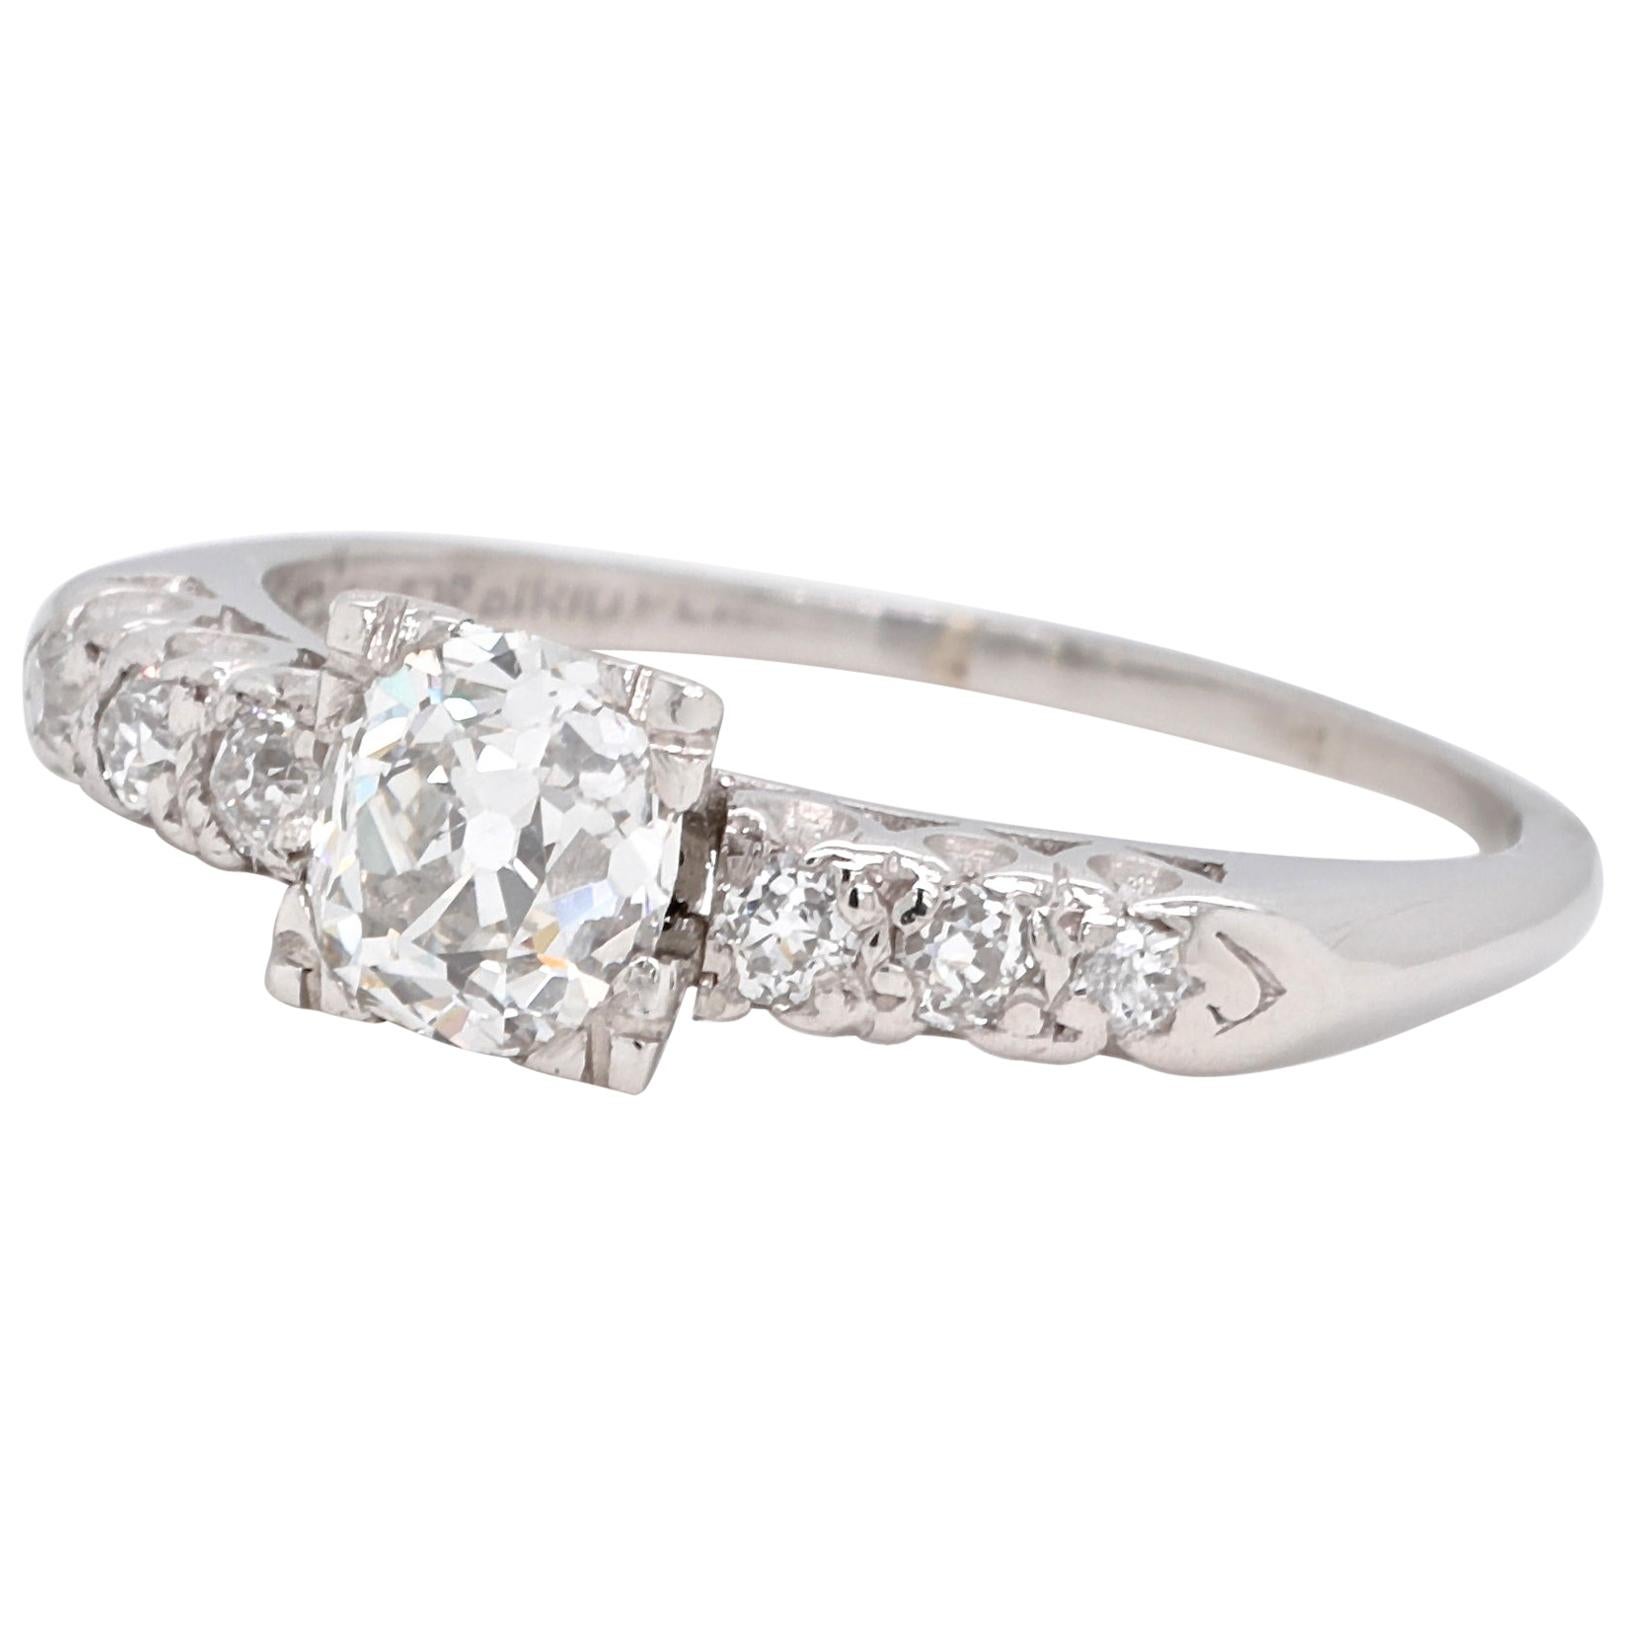 Late Art Deco Old European Cut Diamond Platinum Engagement Ring